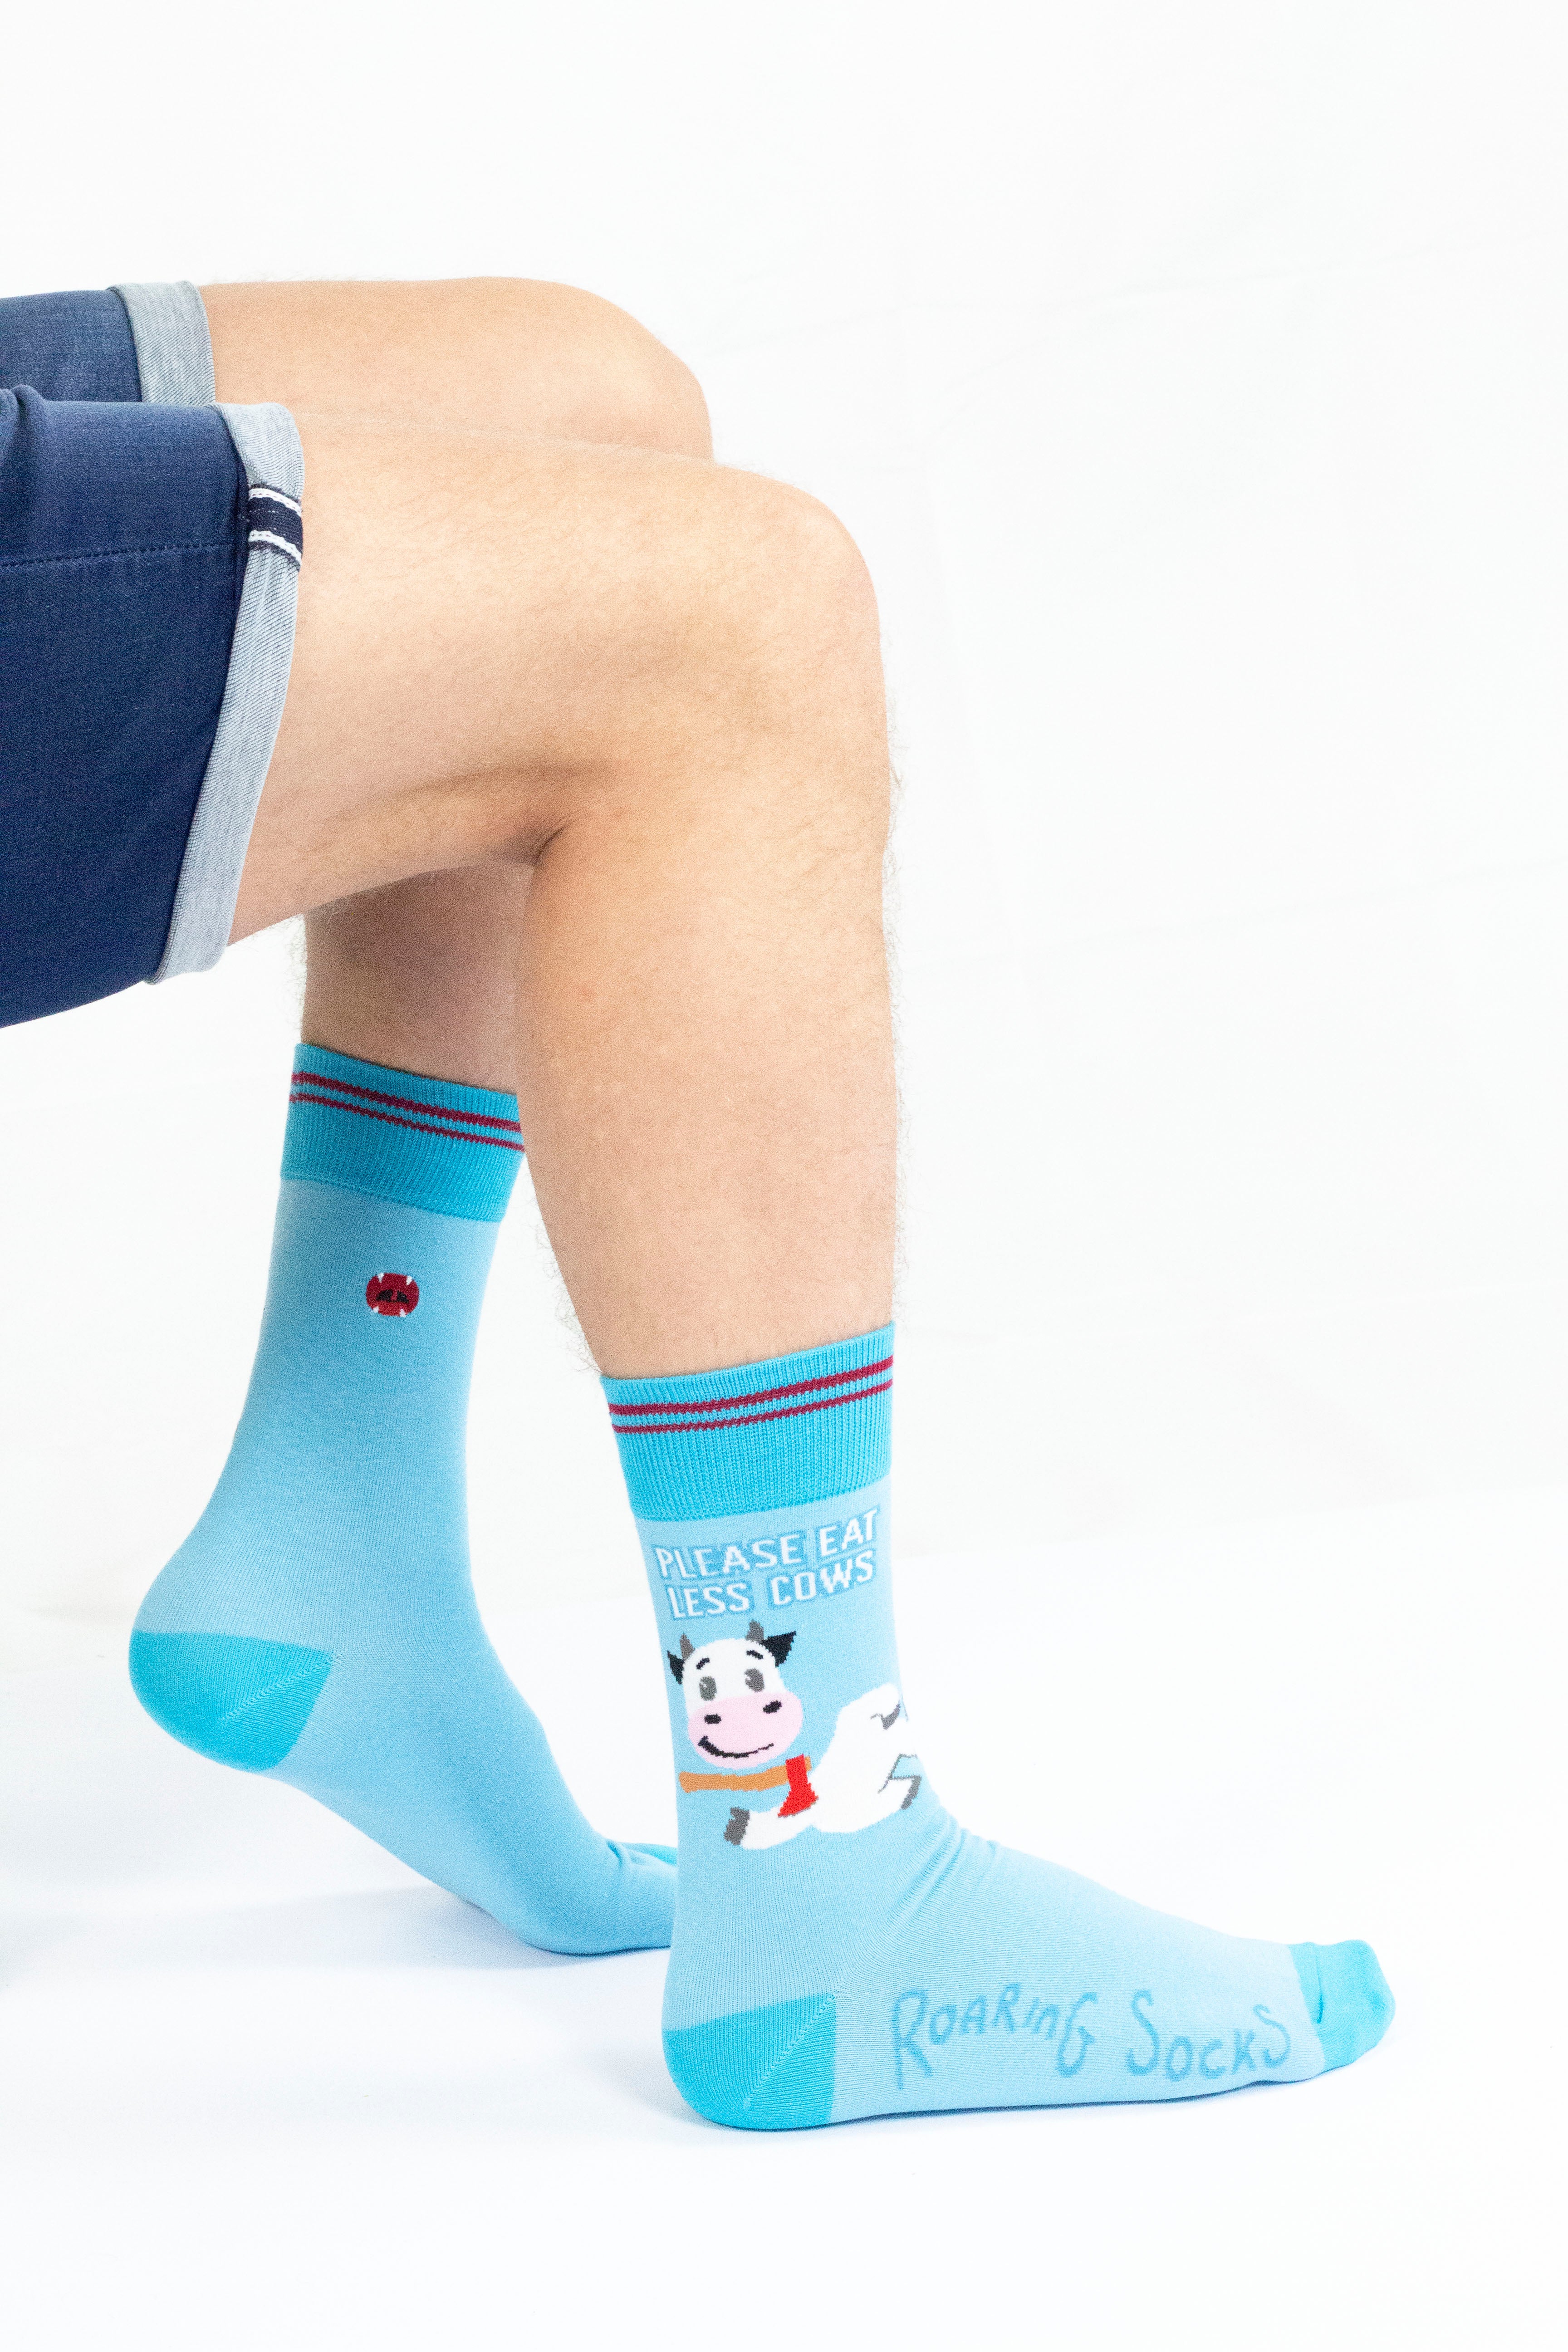 Roaring Socks - Sokken - Please eat less cows - Blauw - Koe - Bijl - Slachten - Vegetariër Vegan - Milieu - Katoen - Leuk - Grappig - Vrolijk - Fashion – Cadeau